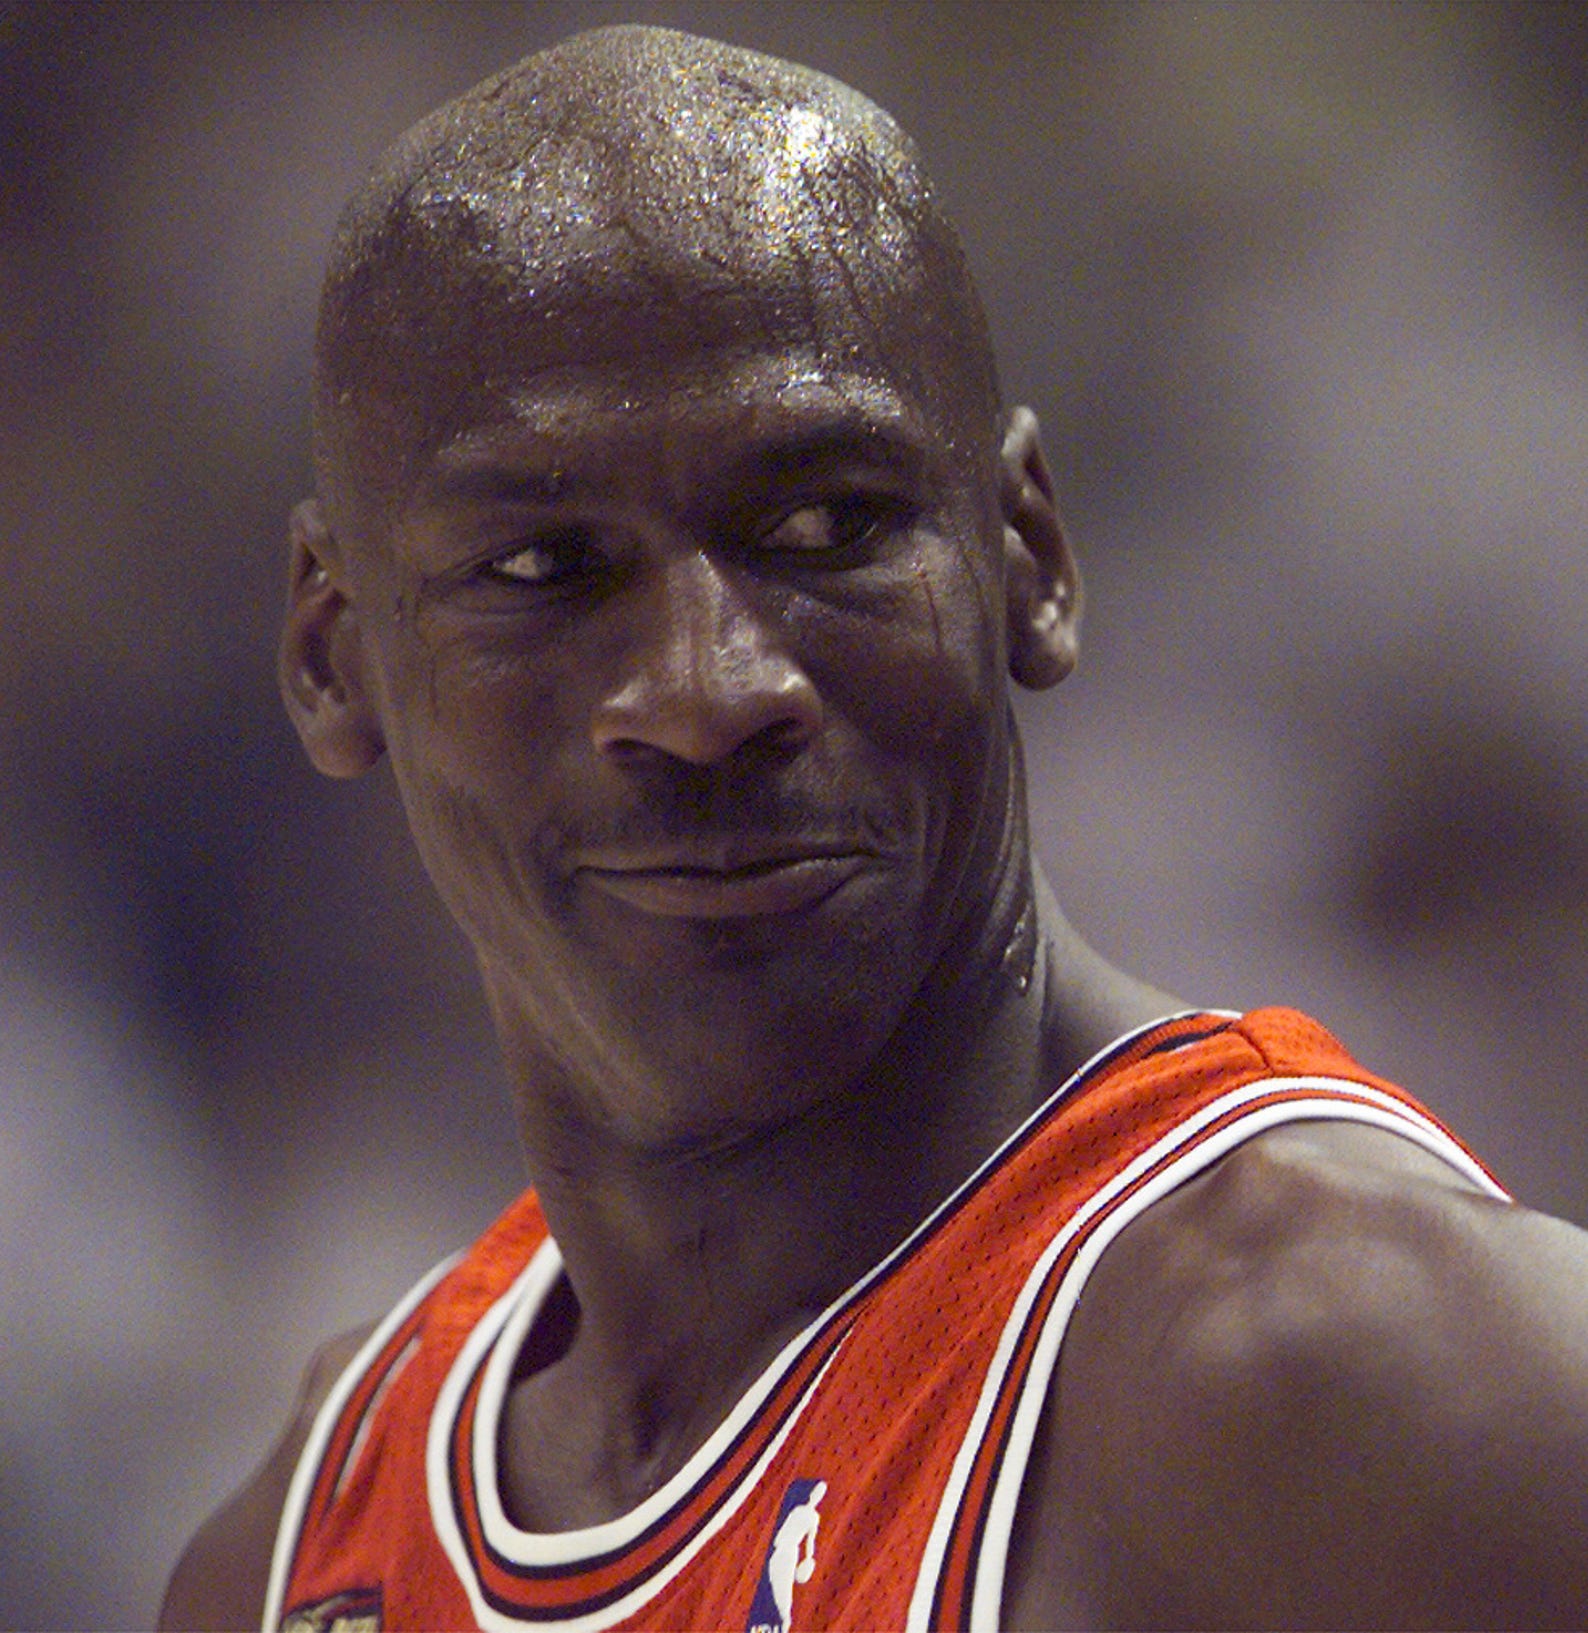 The Last Dance': Michael Jordan and the 1997-98 title